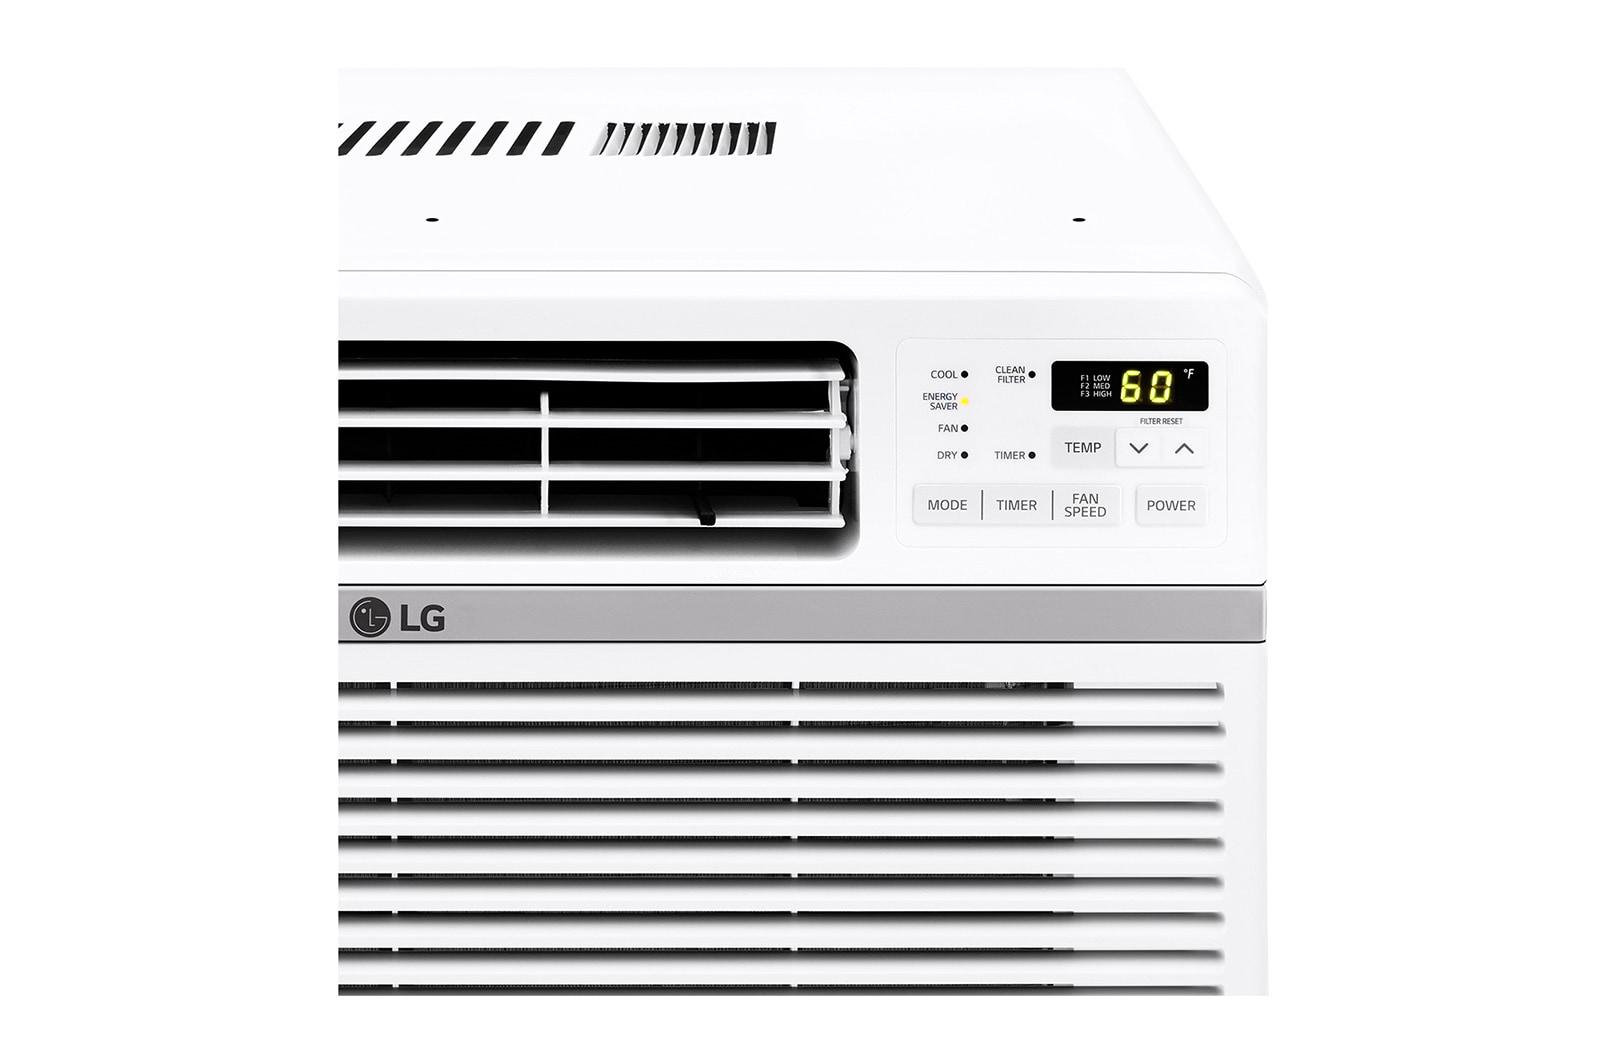 18,000 BTU Window Air Conditioner